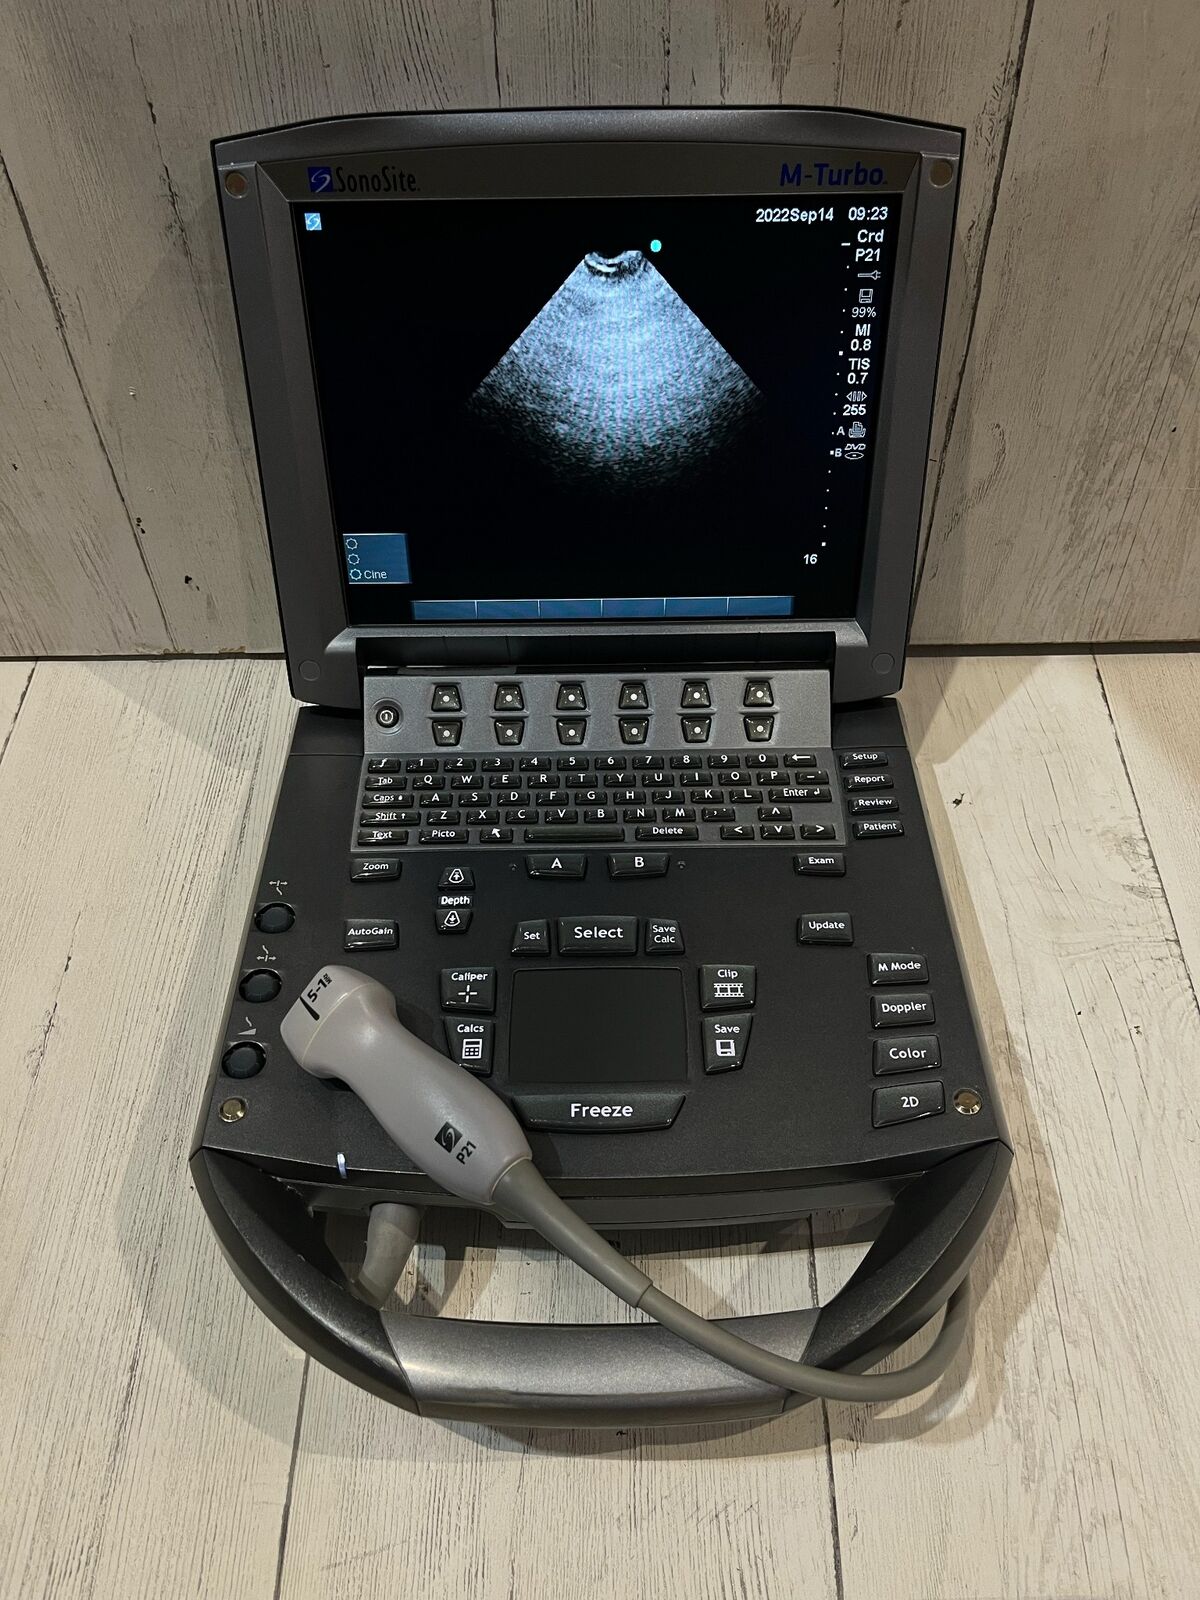 Sonosite M-Turbo Portable Ultrasound 2010 DIAGNOSTIC ULTRASOUND MACHINES FOR SALE